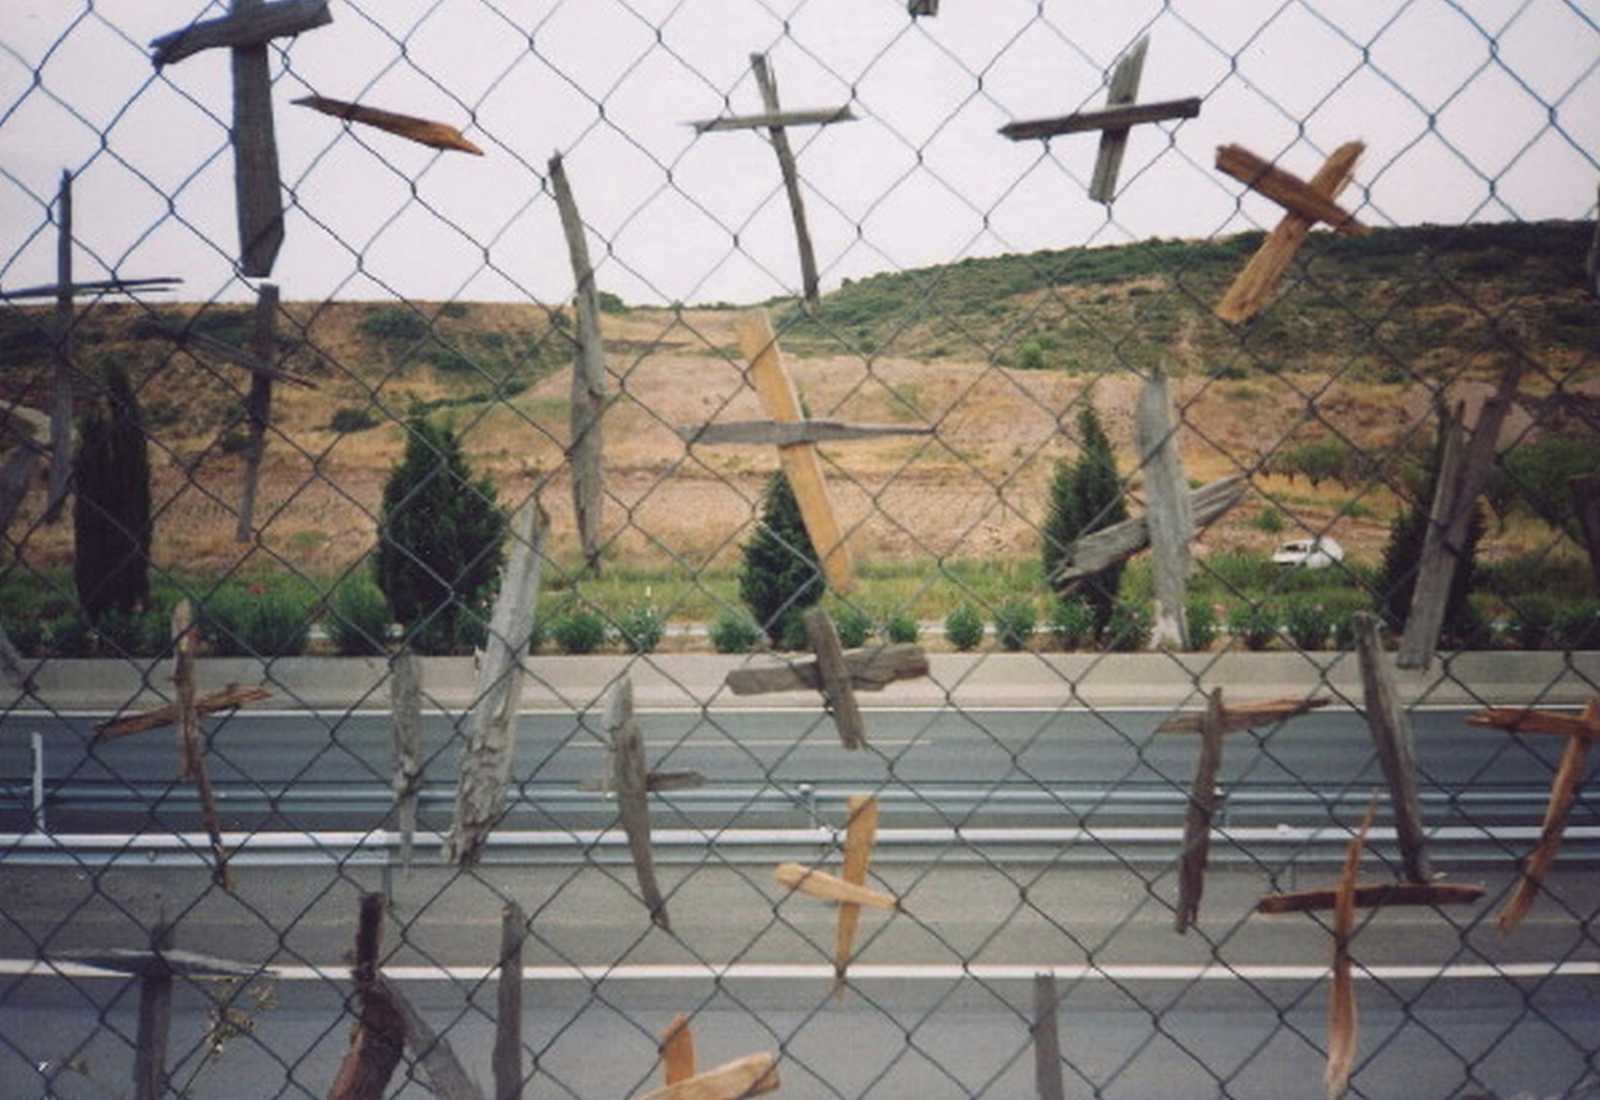 Las alambradas de la salida de Logroño